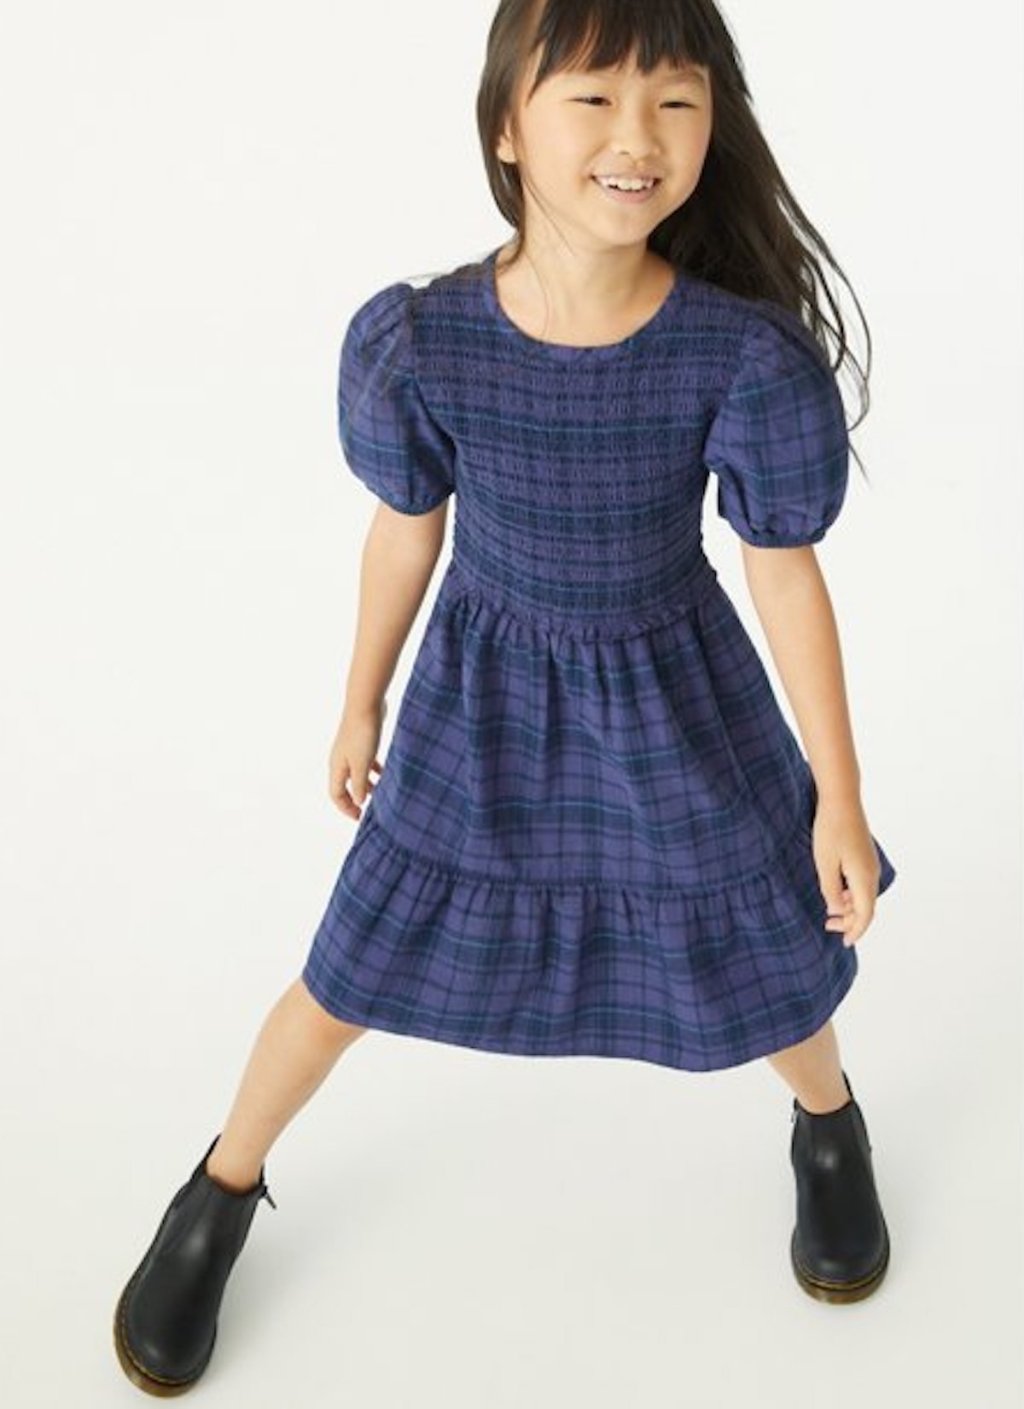 stock photo of girl wearing purple plaid dress